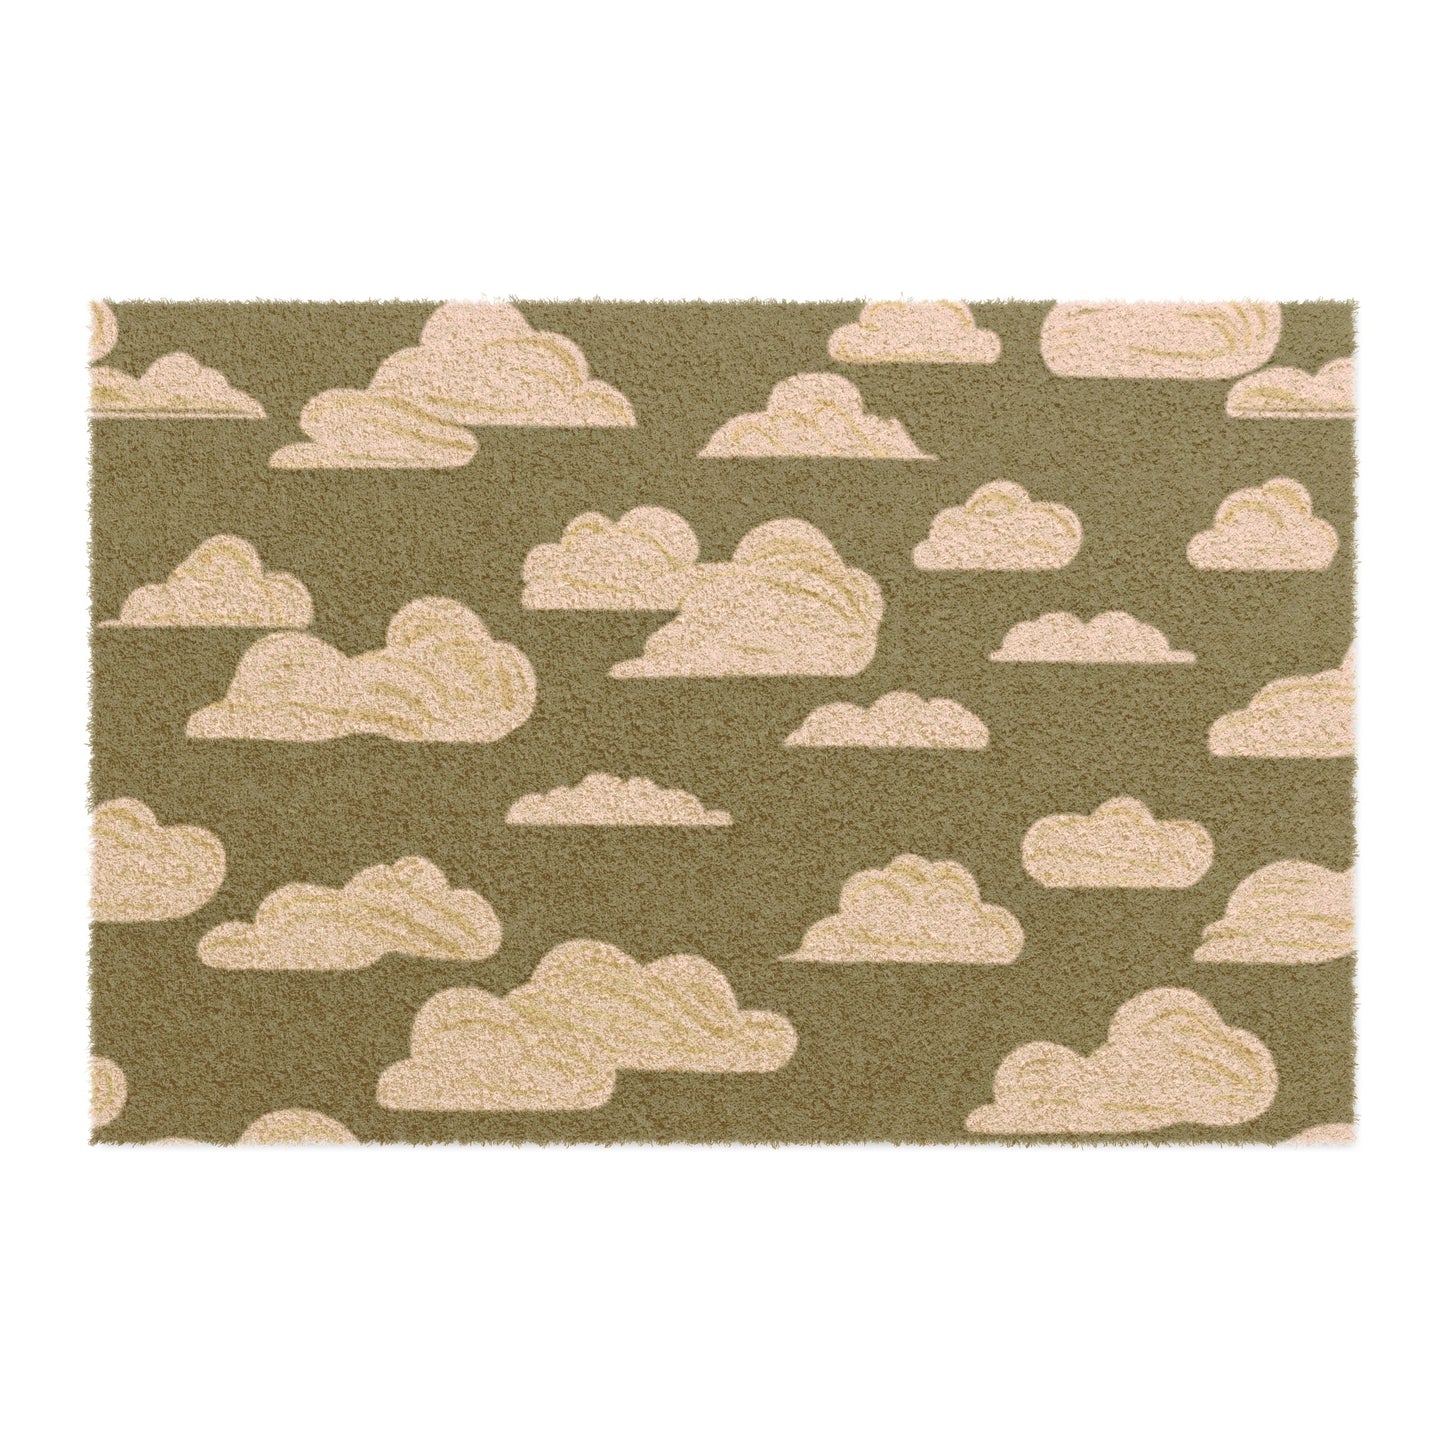 Cute Cloud Doormat